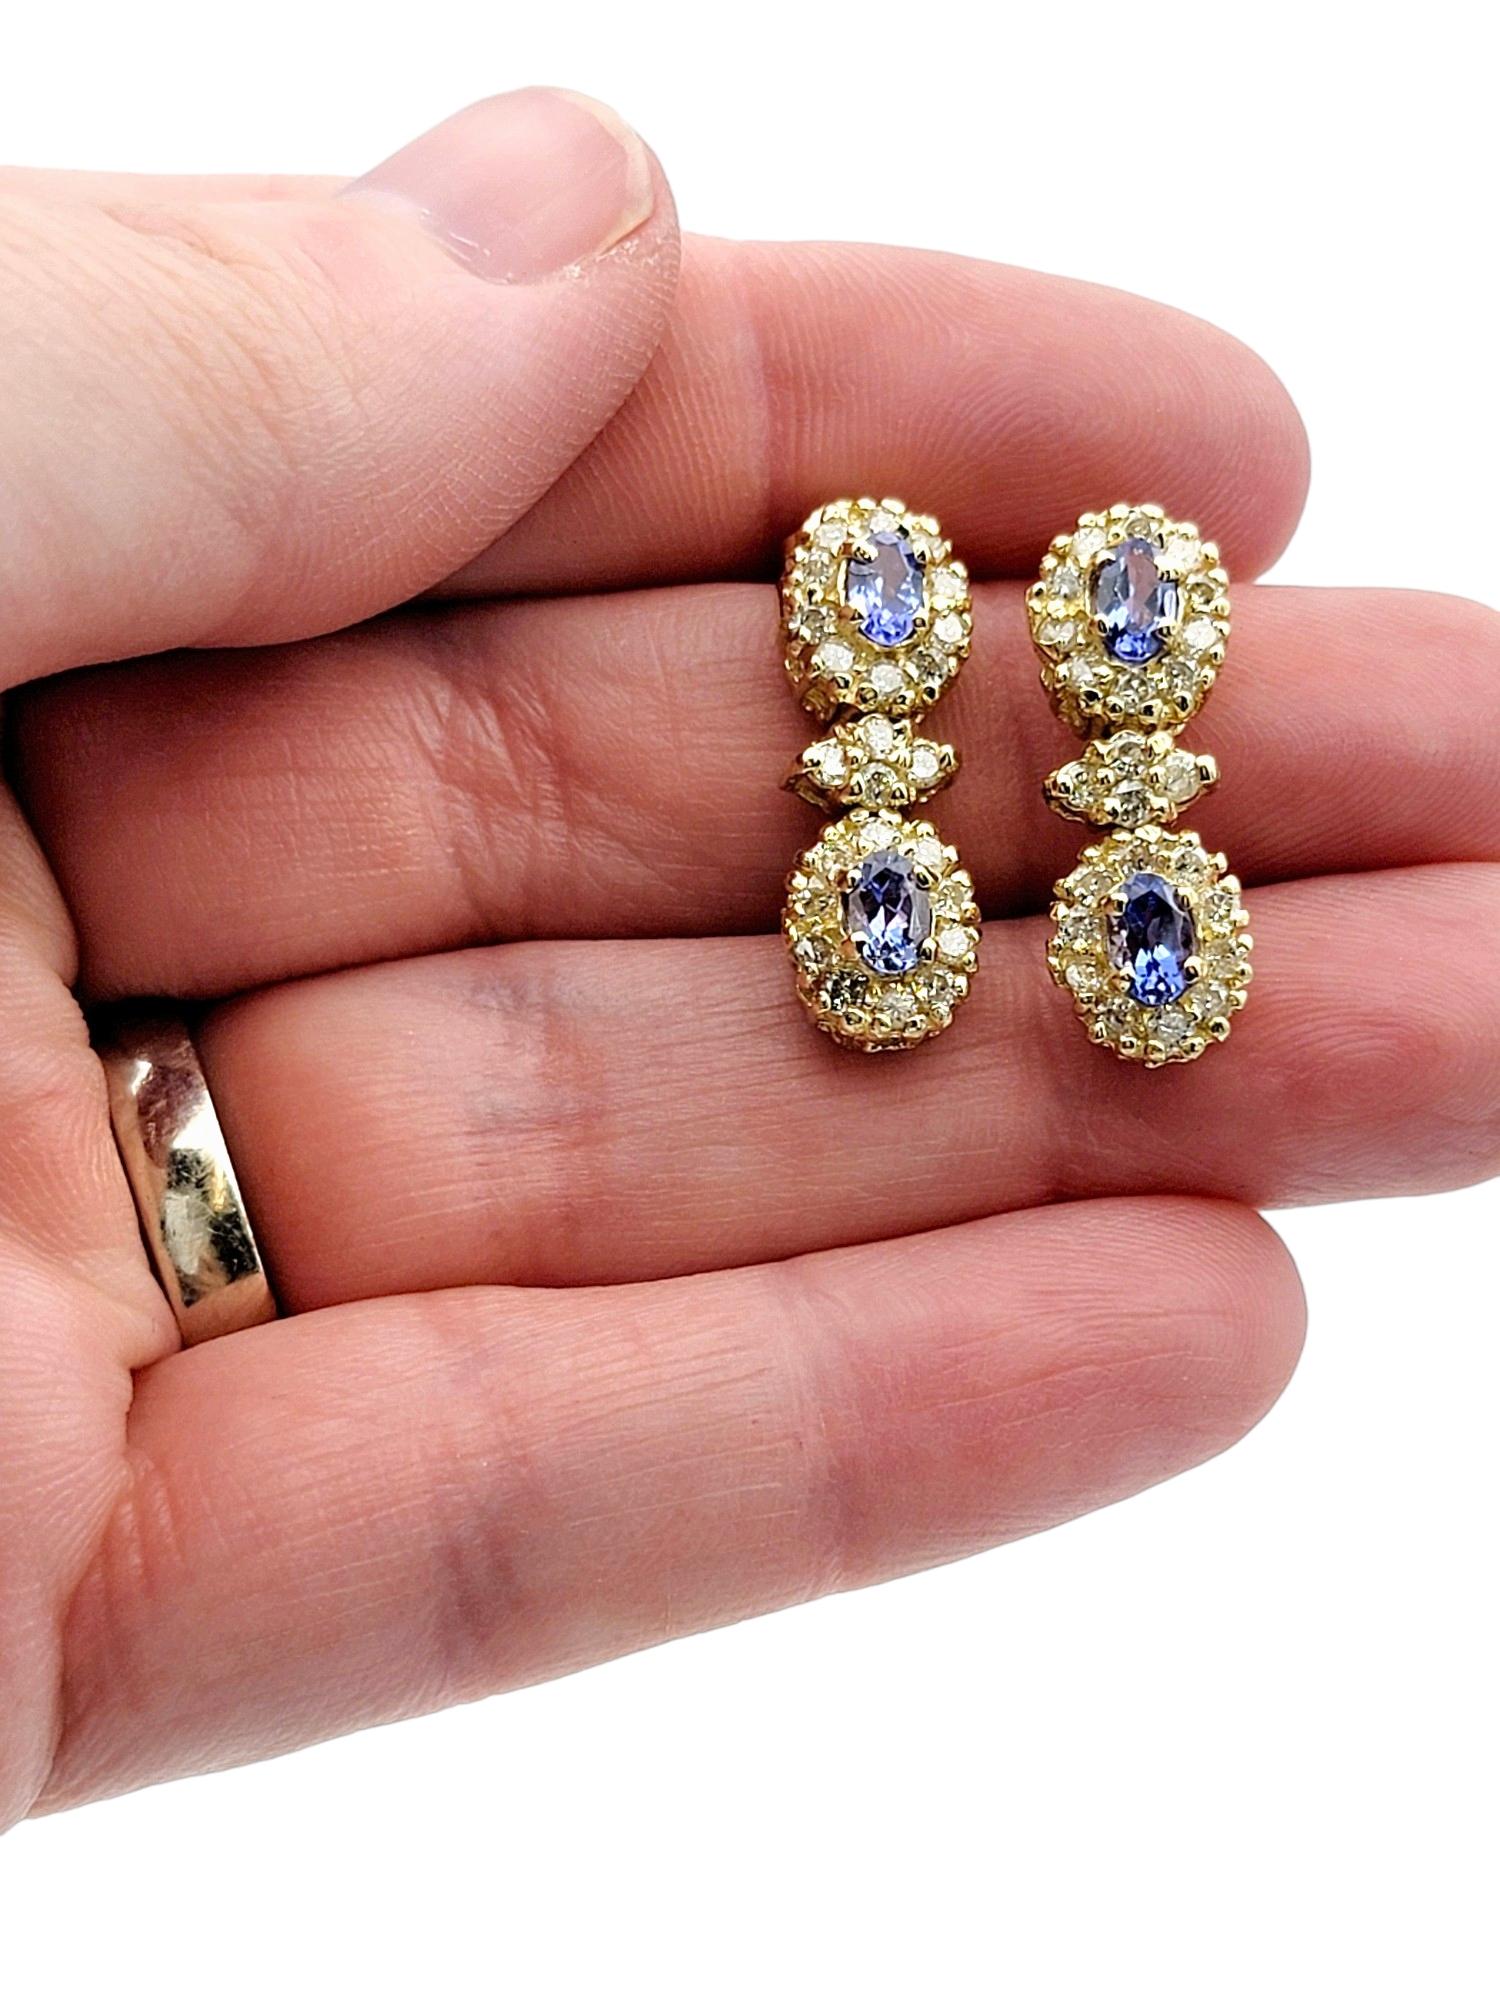 Blue Tanzanite and Diamond Halo Dangle Earrings Set in 14 Karat Yellow Gold For Sale 1